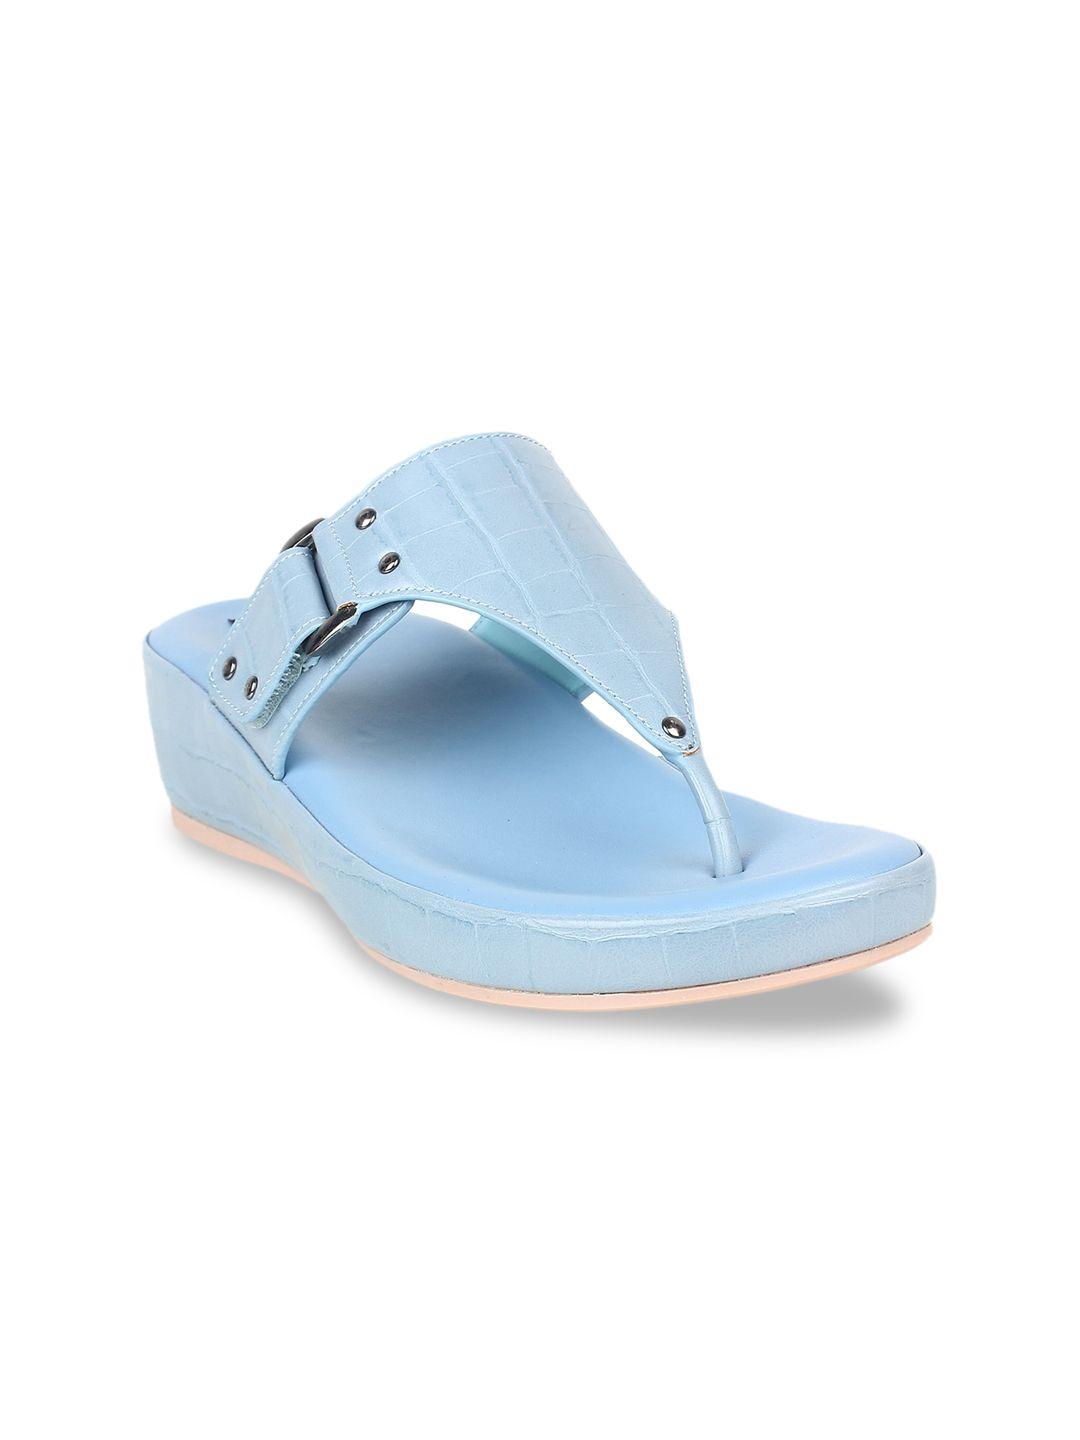 sherrif shoes women blue solid wedges